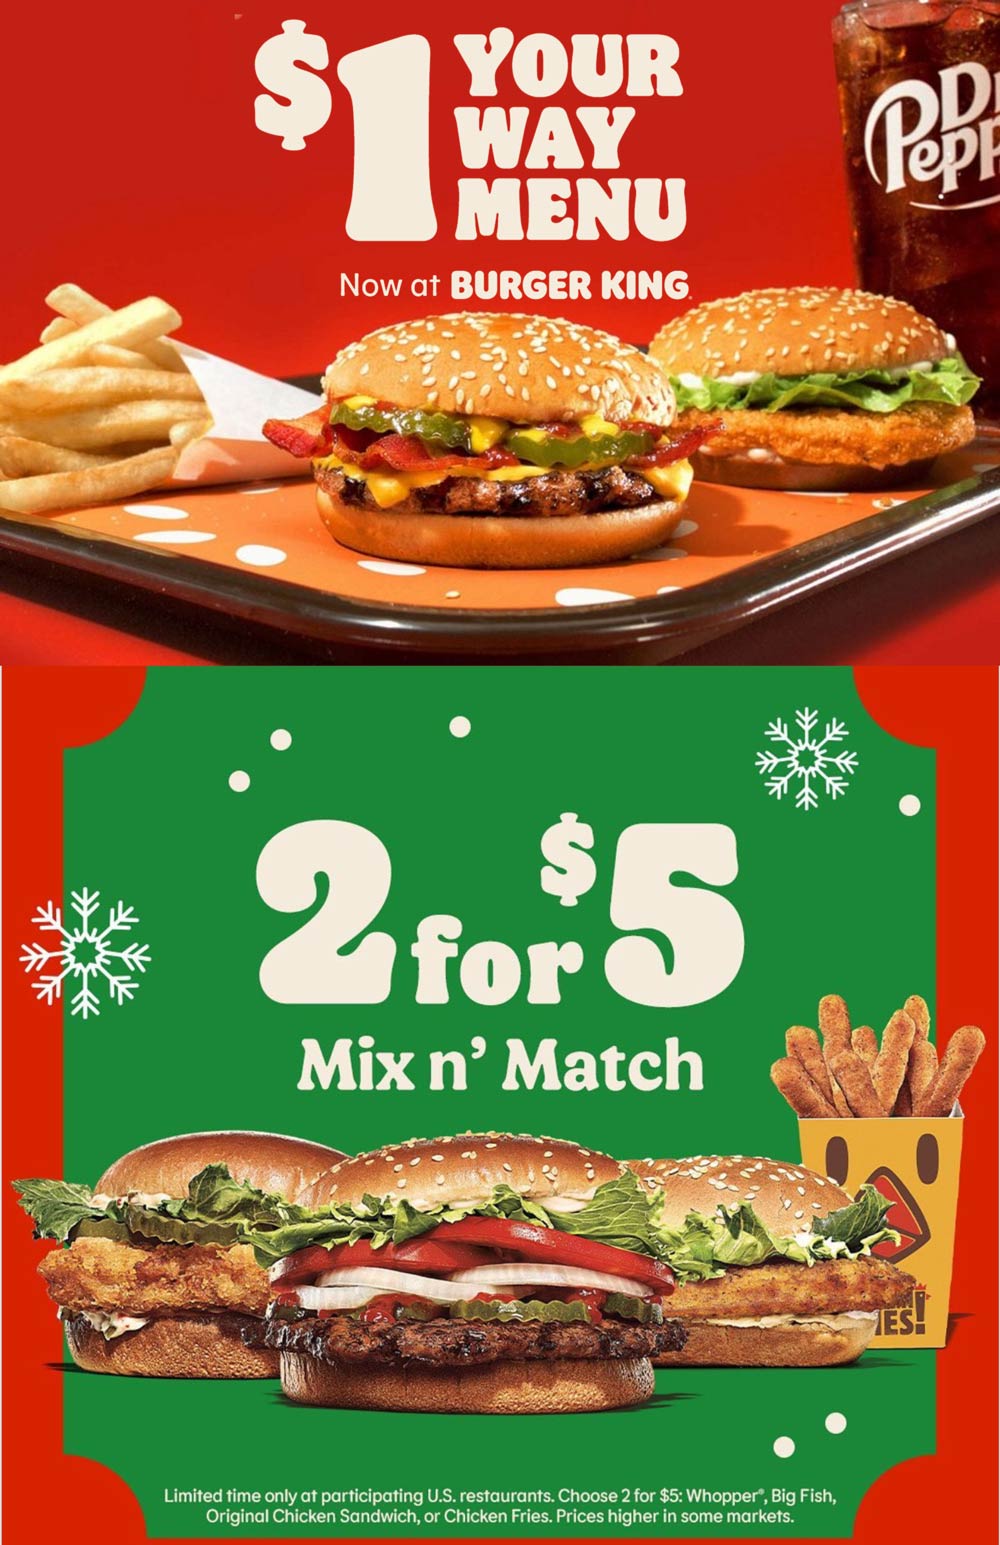 Burger King restaurants Coupon  Bacon cheeseburger, chicken jr. sandwich, fries or drink = $1 each at Burger King #burgerking 